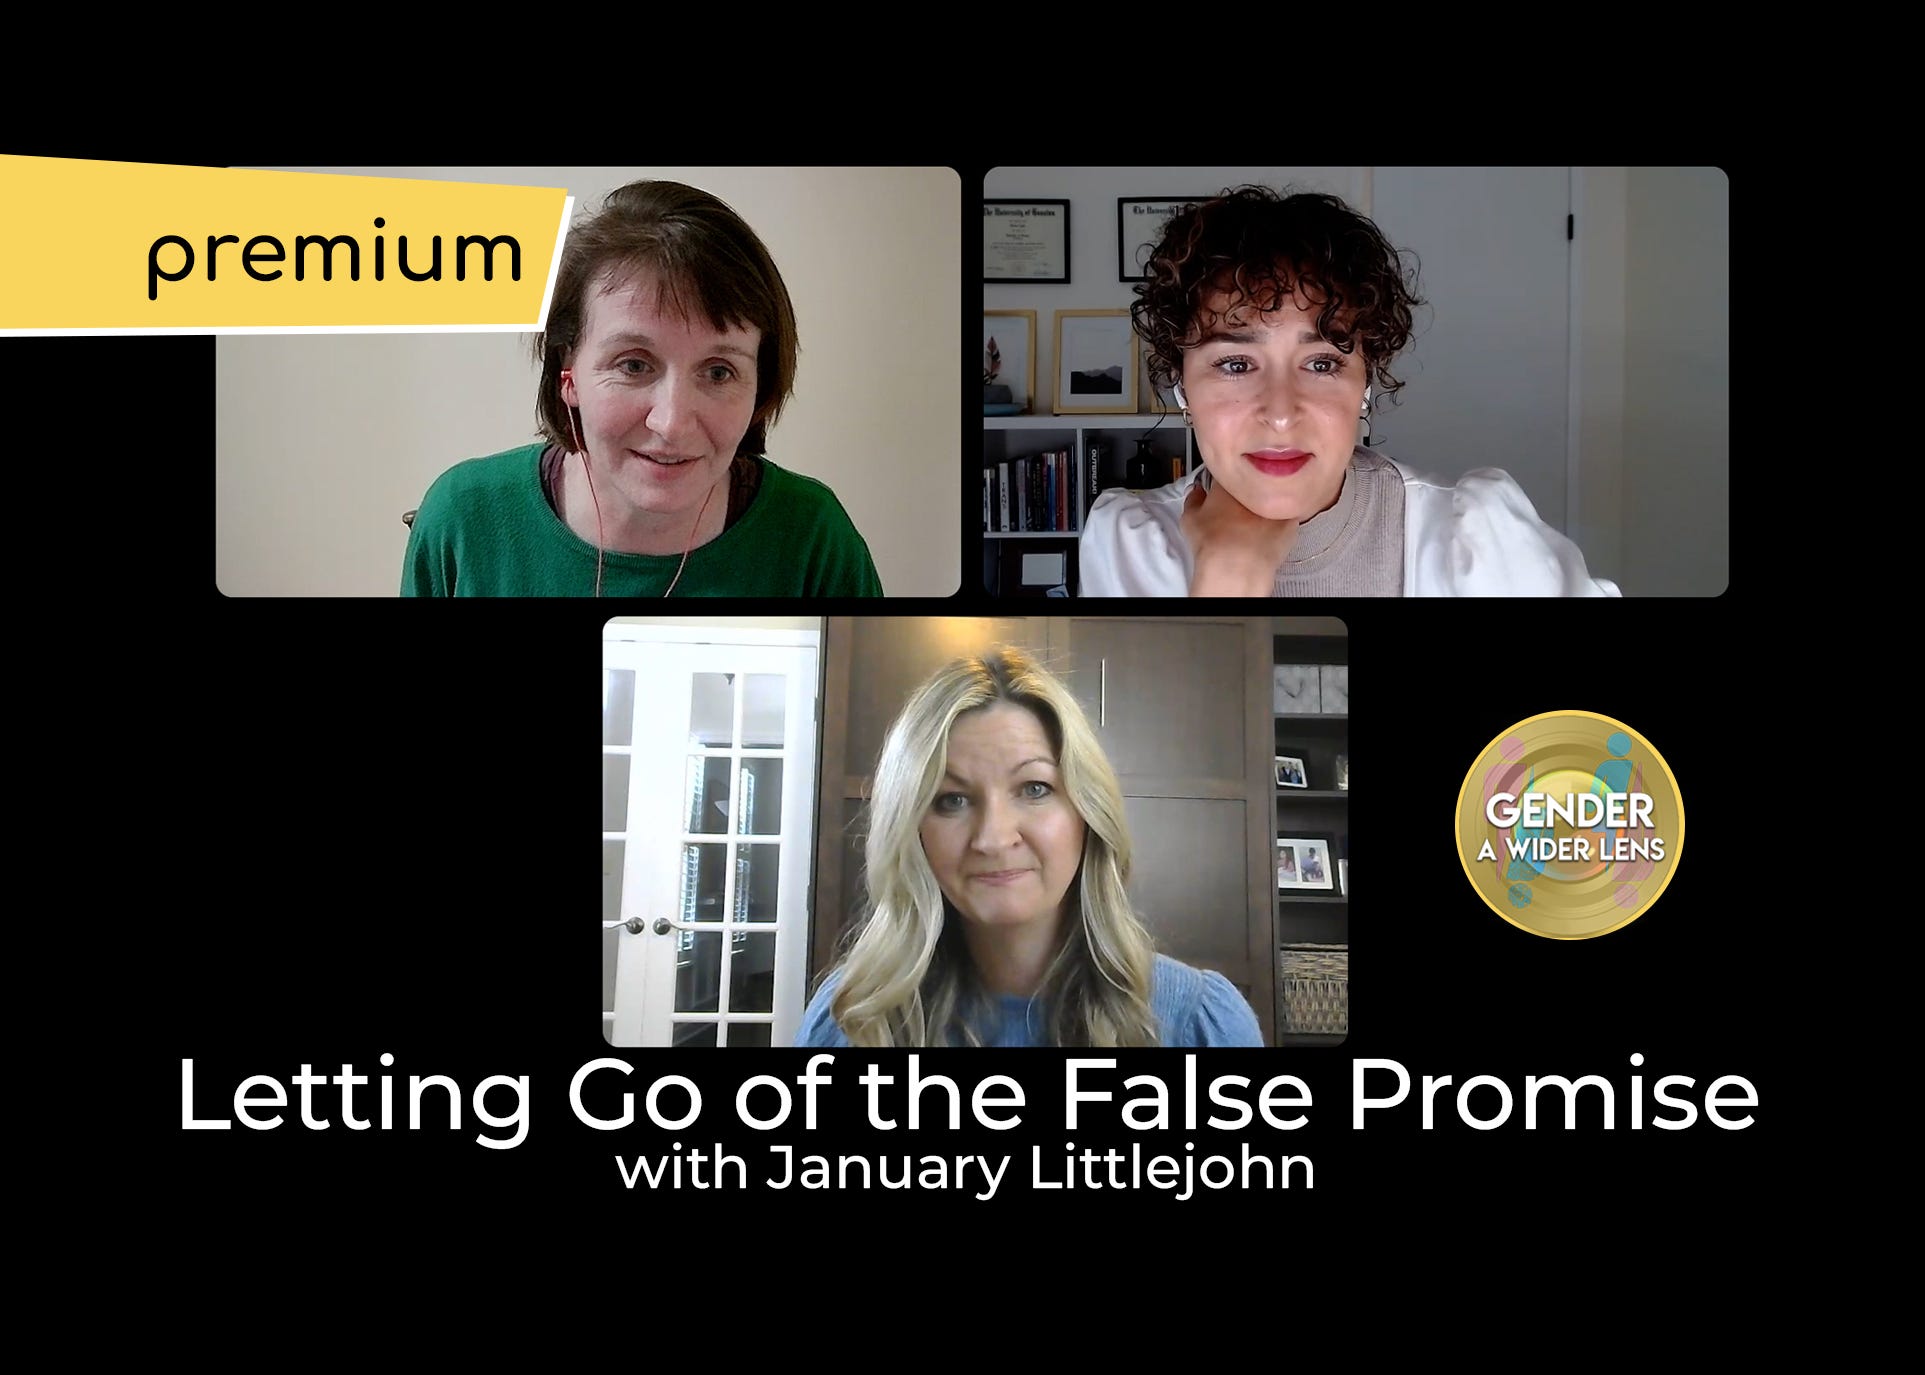 Premium: Letting Go of the False Promise